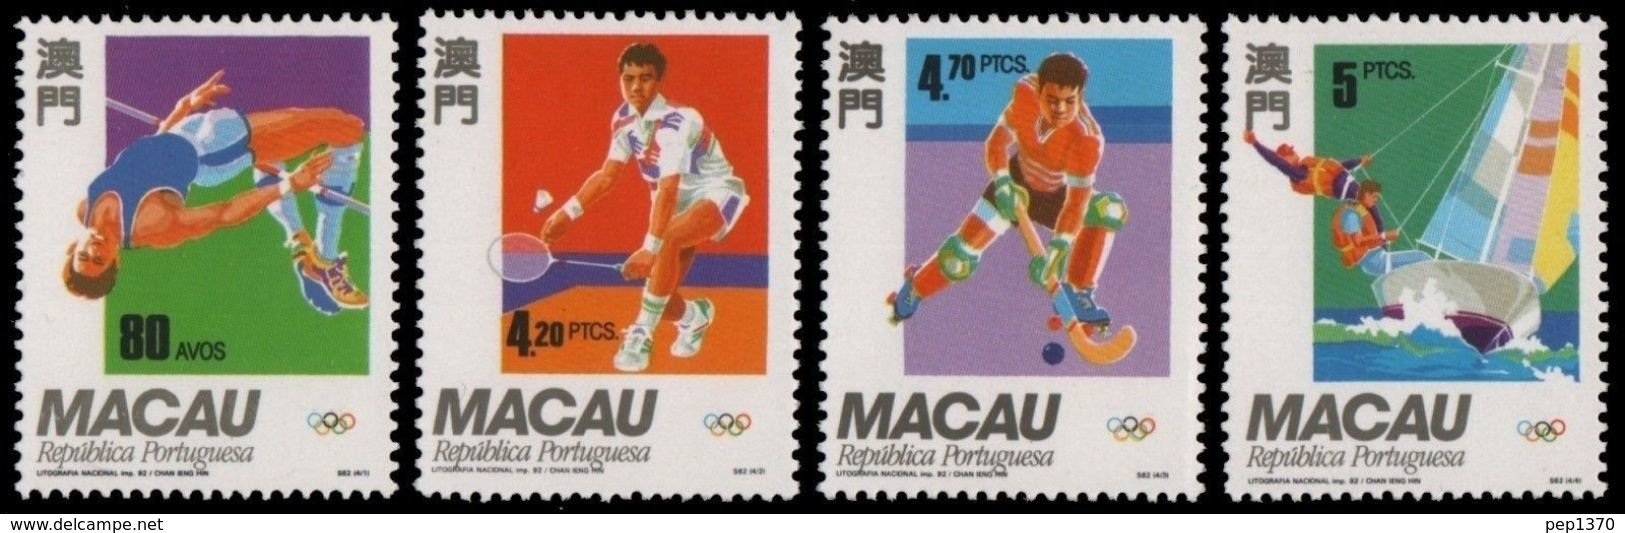 MACAU 1992 - JJOO DE BARCELONA 92 - YVERT 666-669** - MICHEL 702-705 - SCOTT 674-677 - Hockey (Field)